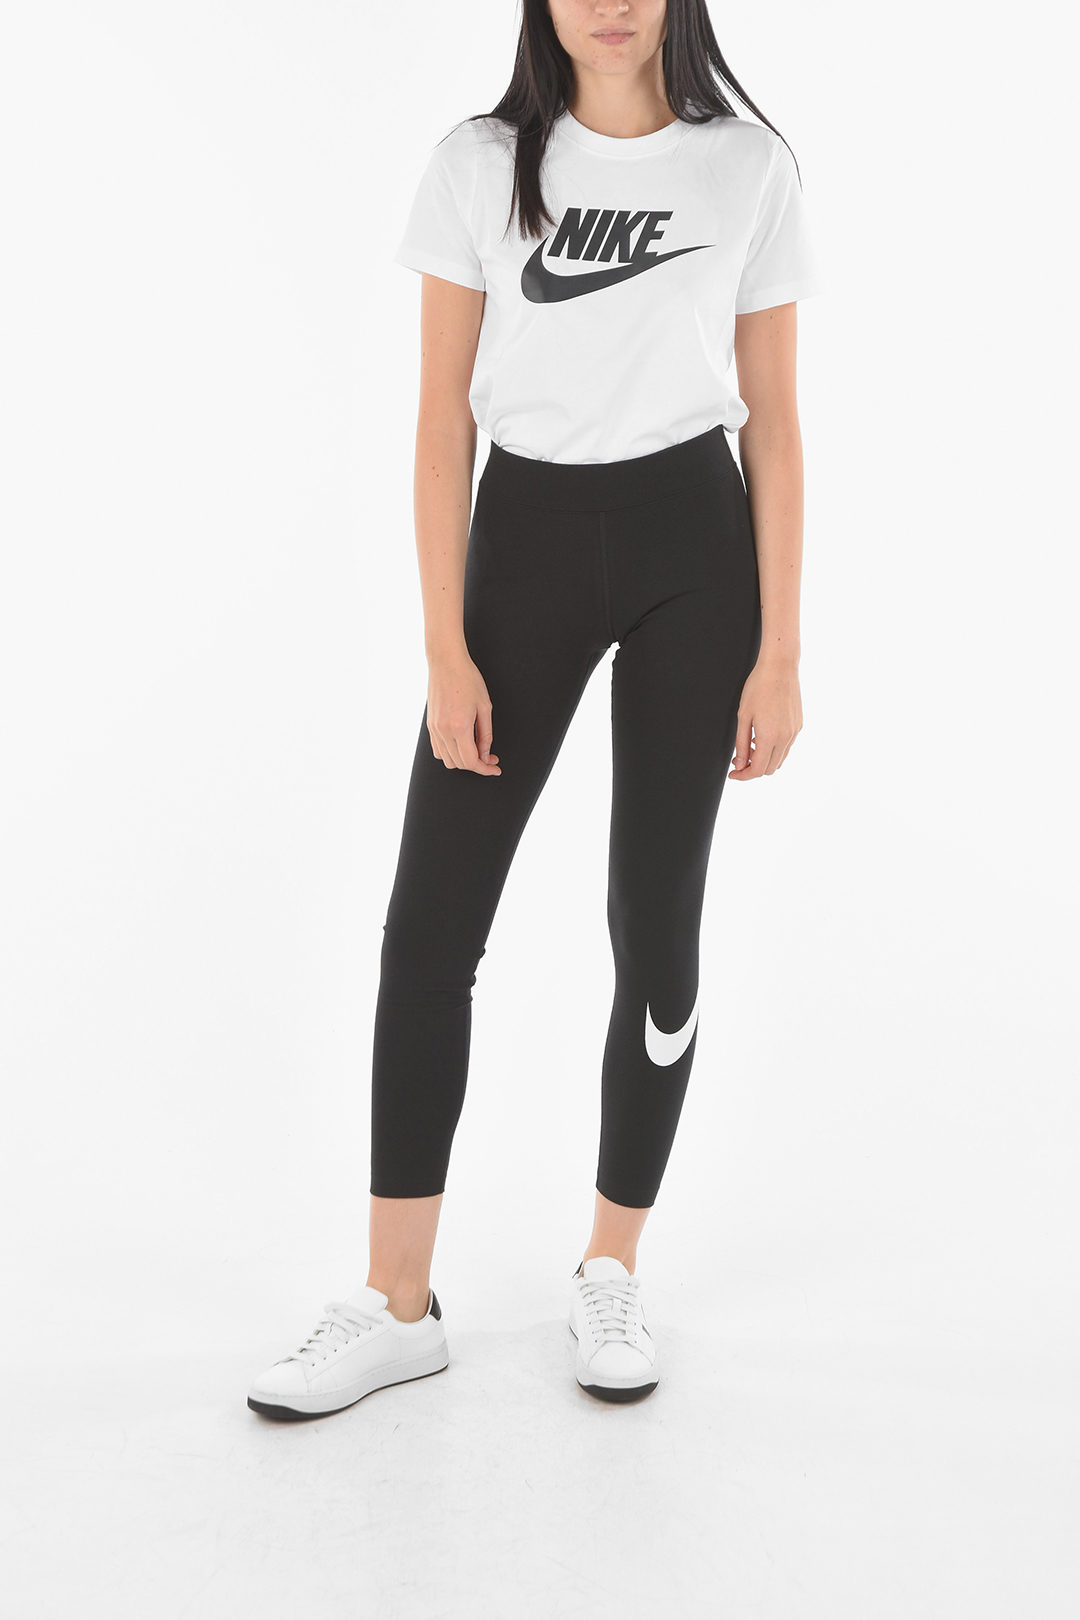 pedestal mini Meeting Nike Logo Printed Tight Fit Leggings women - Glamood Outlet